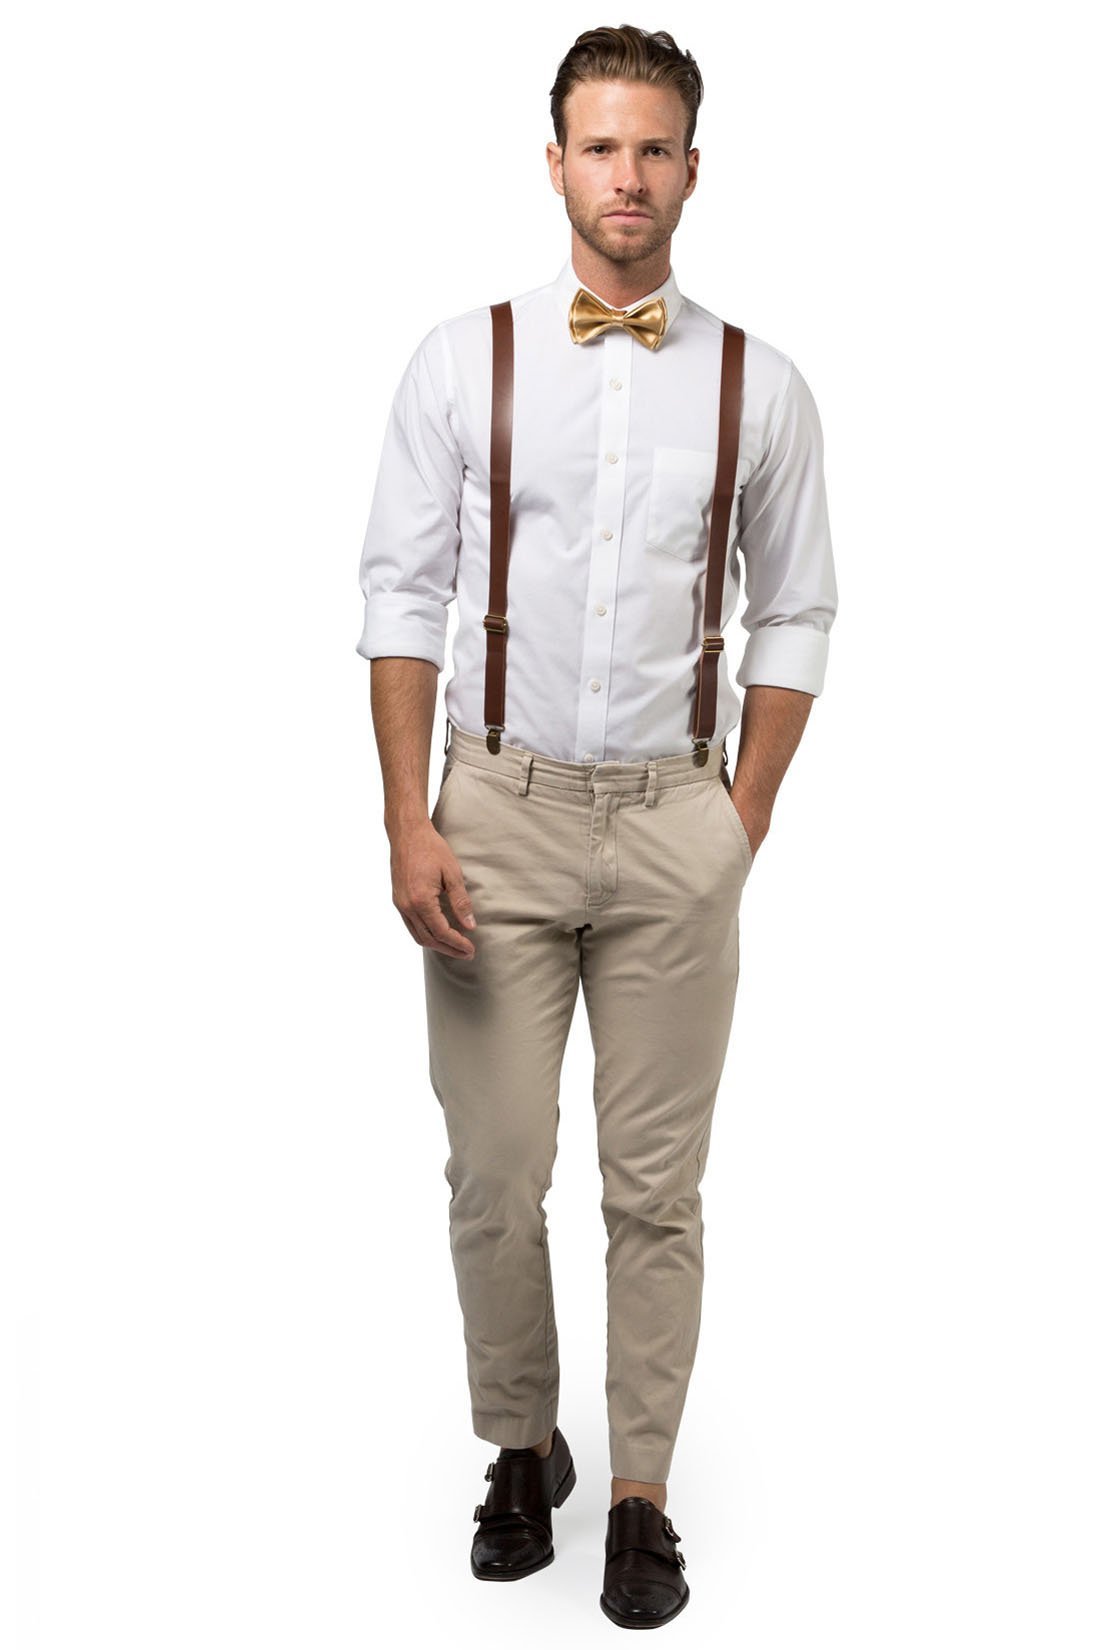 Brown Leather Suspenders & Gold Bow Tie - ARMONIIA